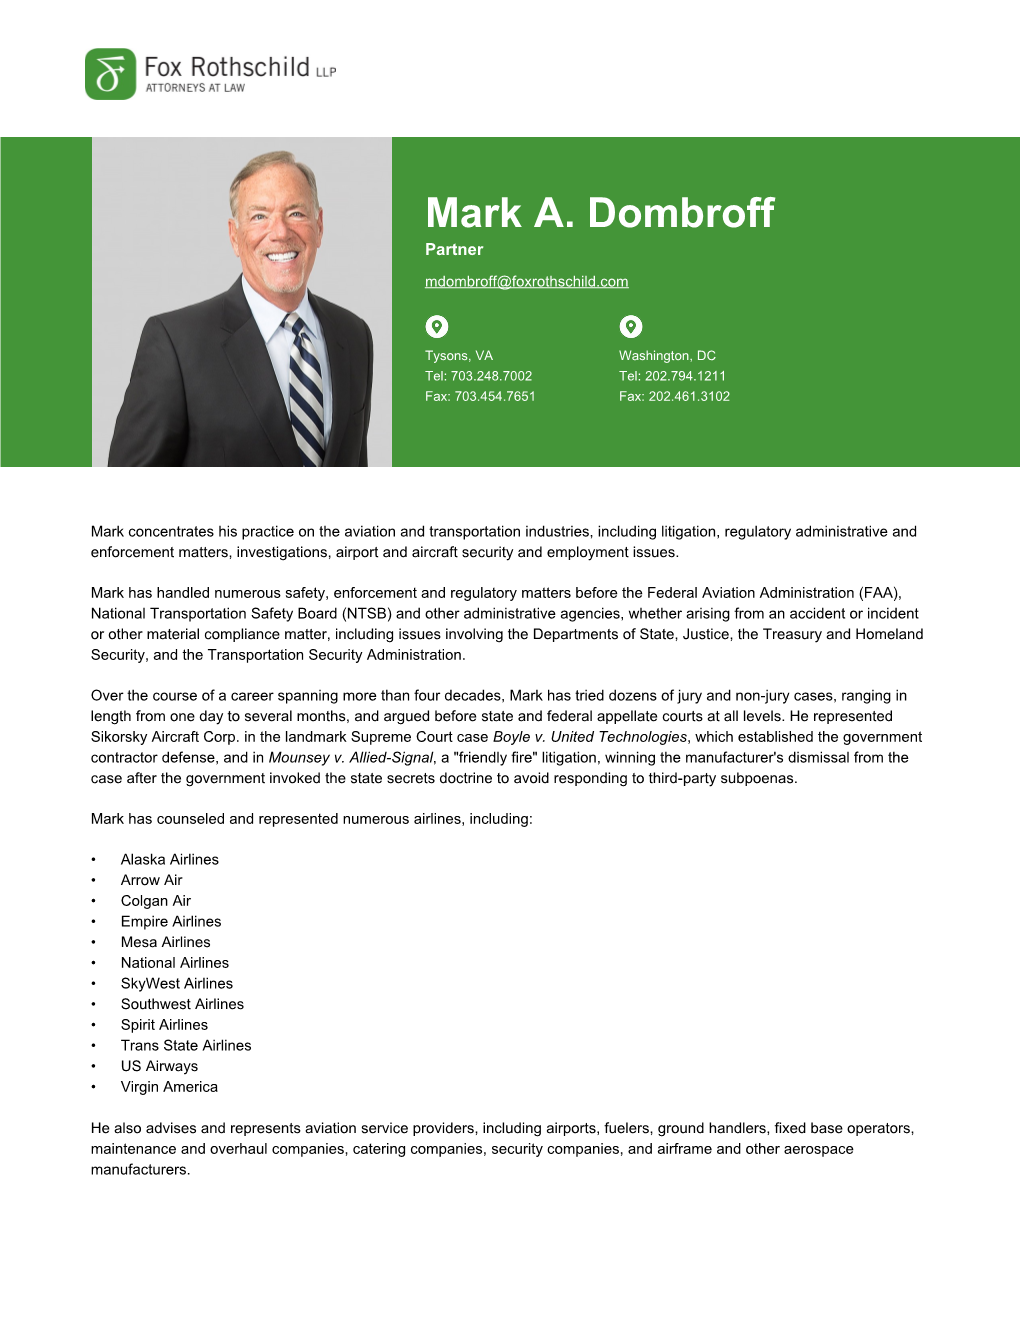 Mark A. Dombroff Partner